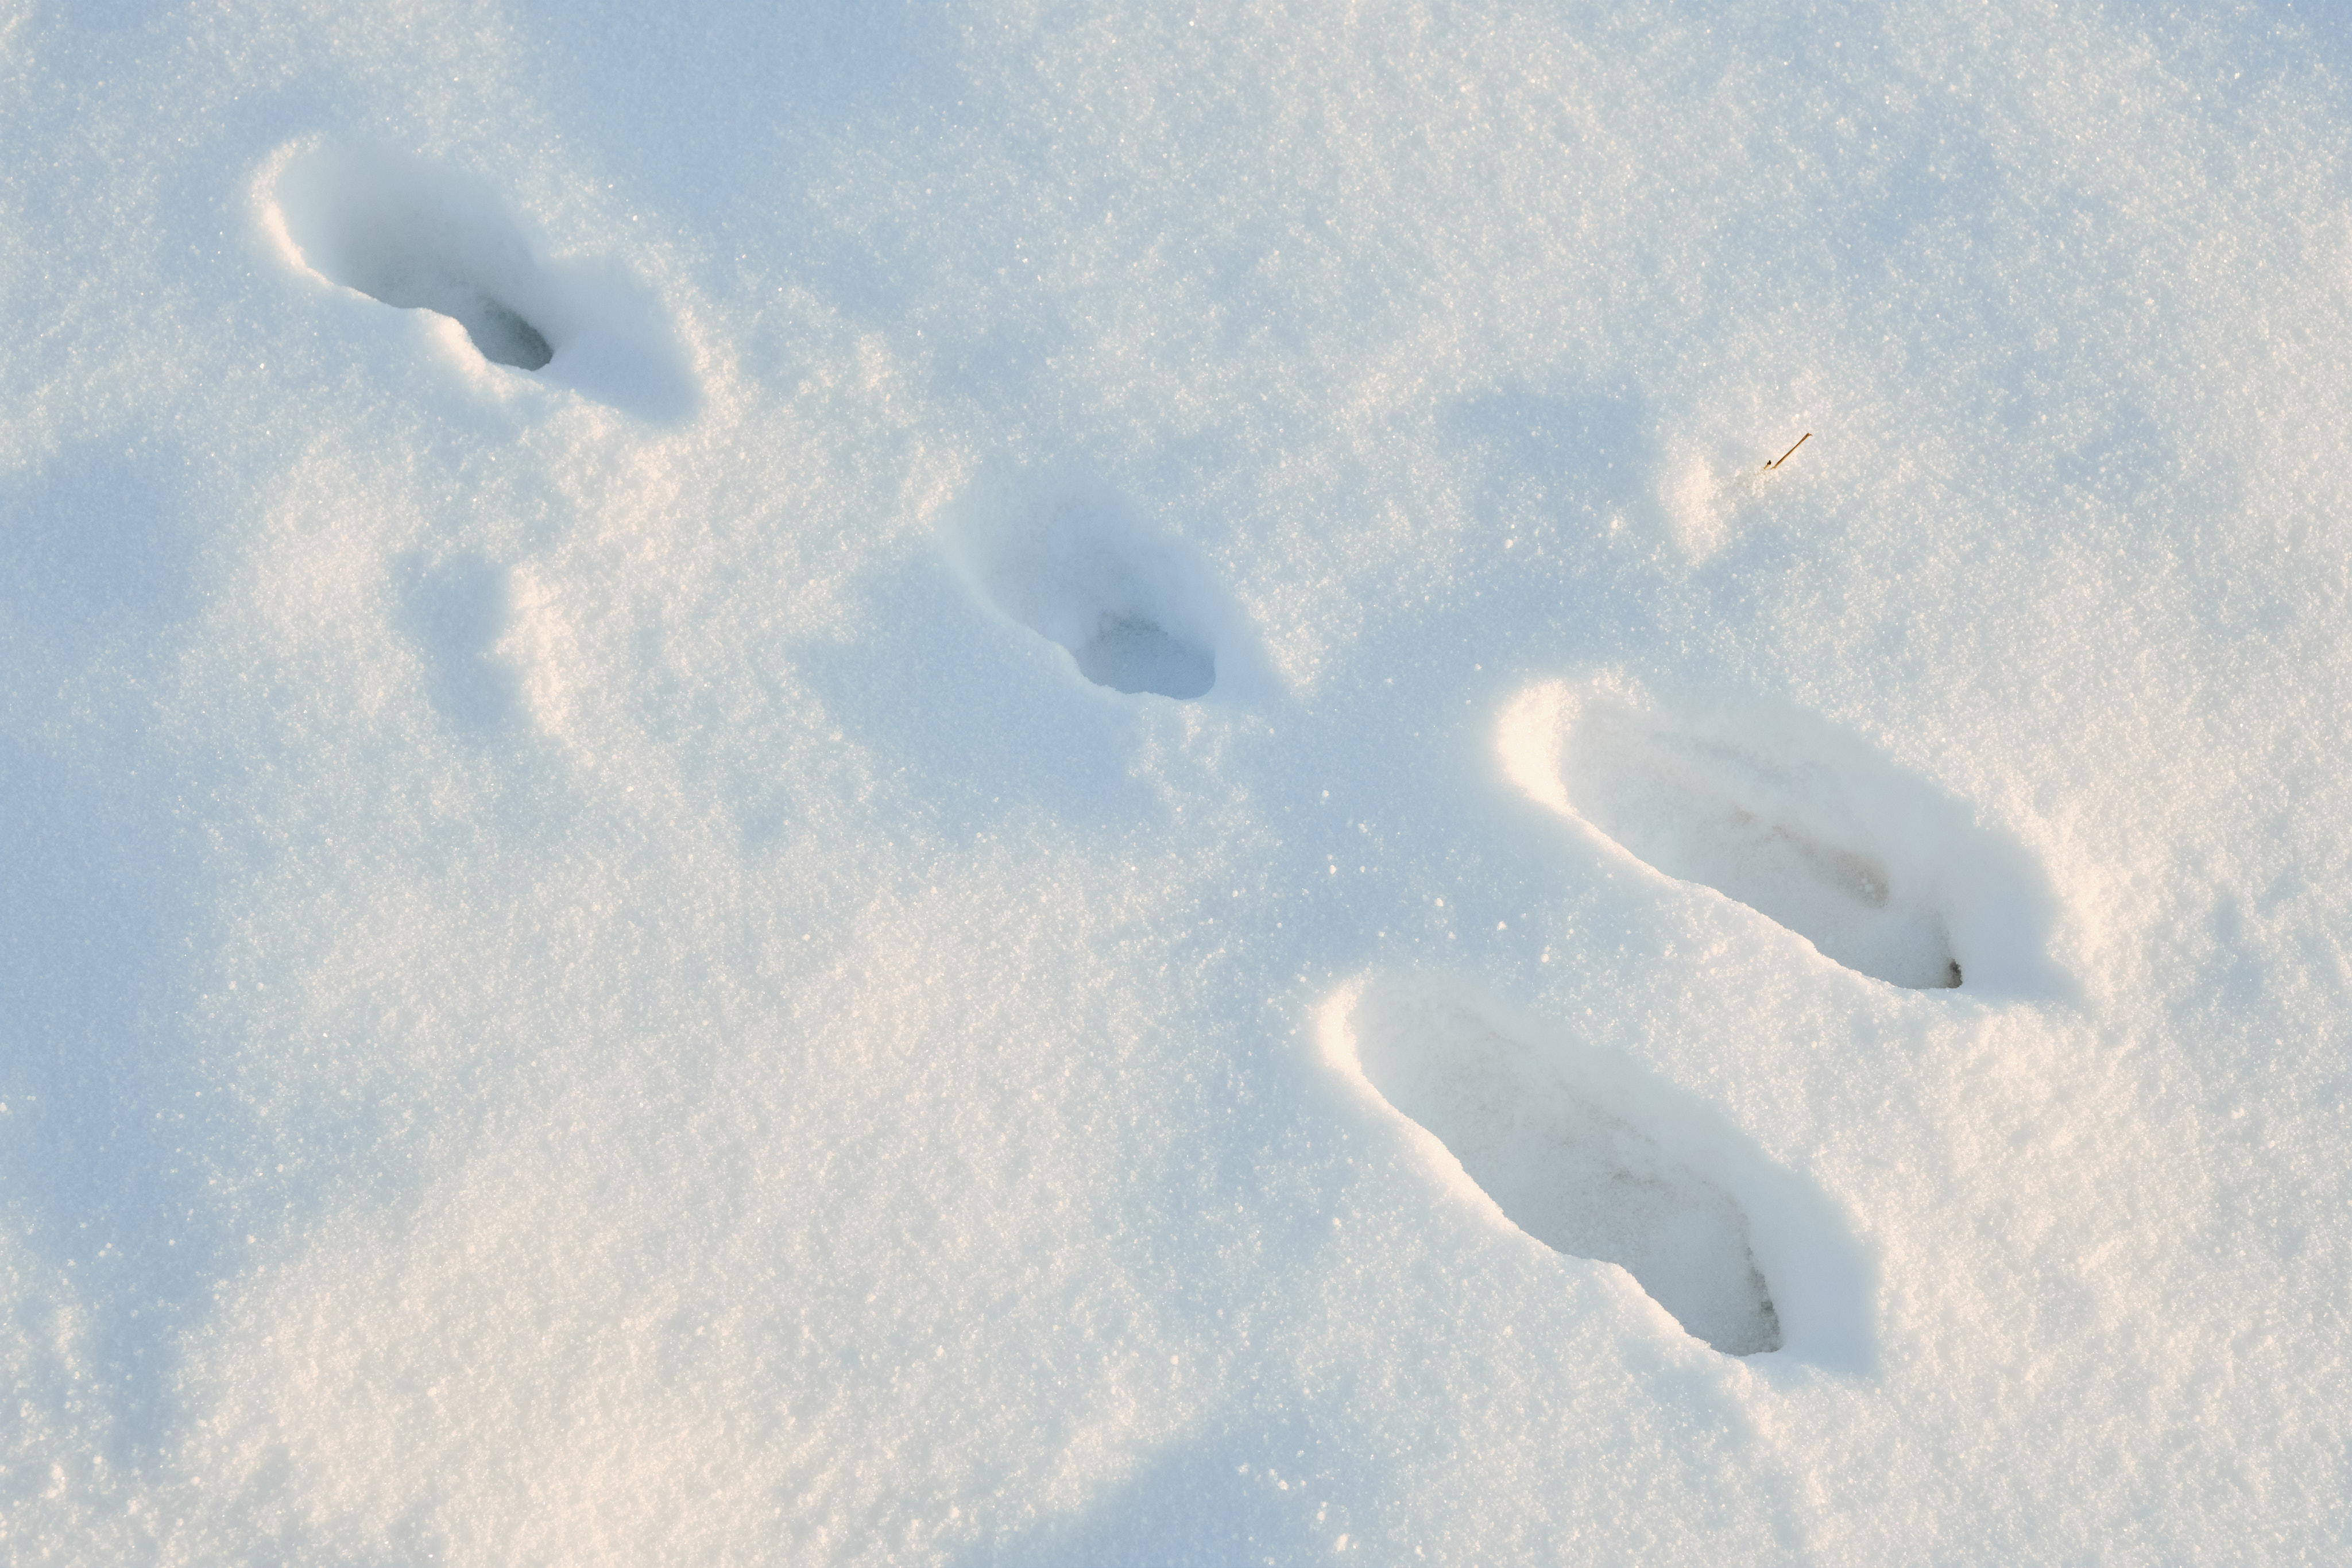 Rabbit footprints in snow.